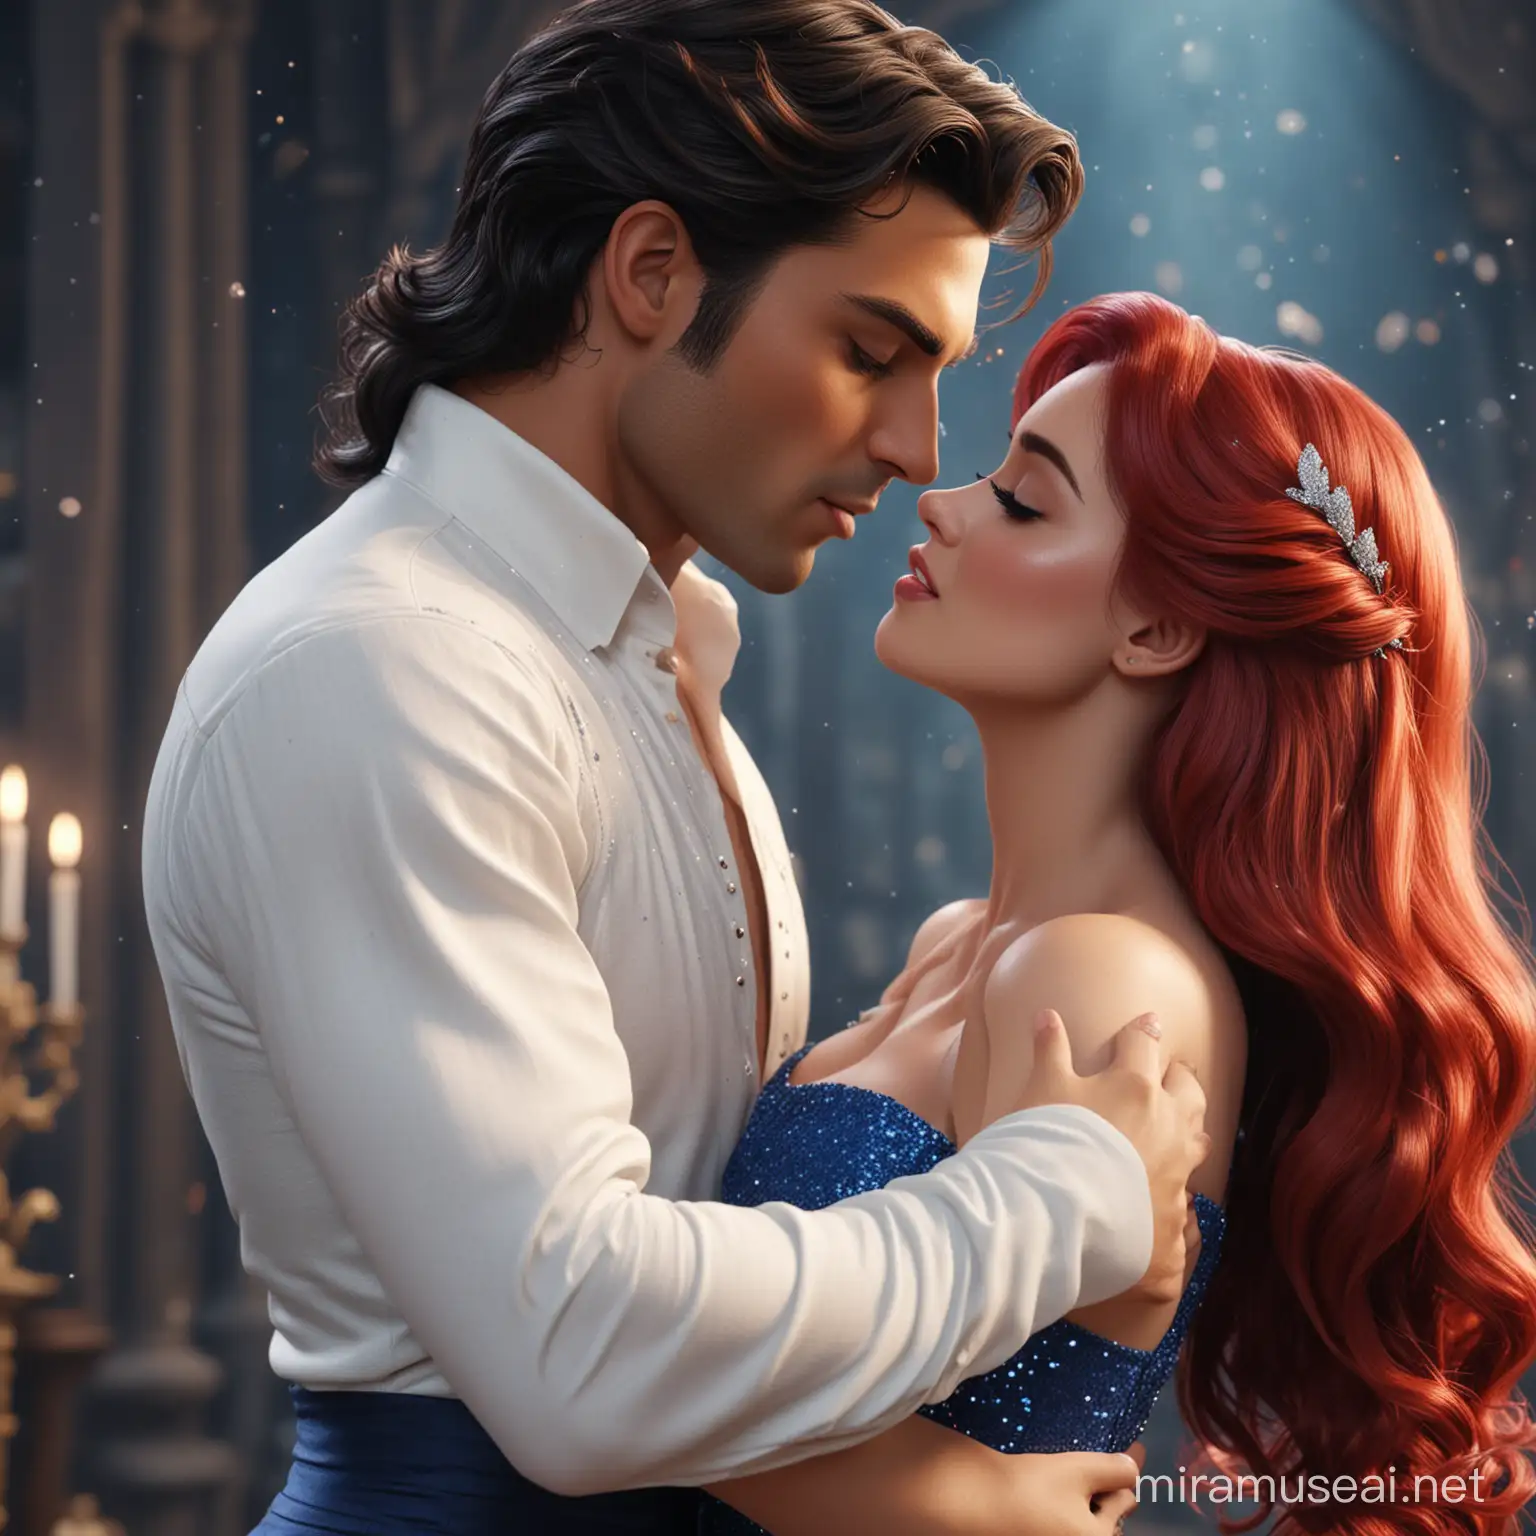 Prince Eric Kisses Princess Ariel in Ultra Realistic 8K Photorealism